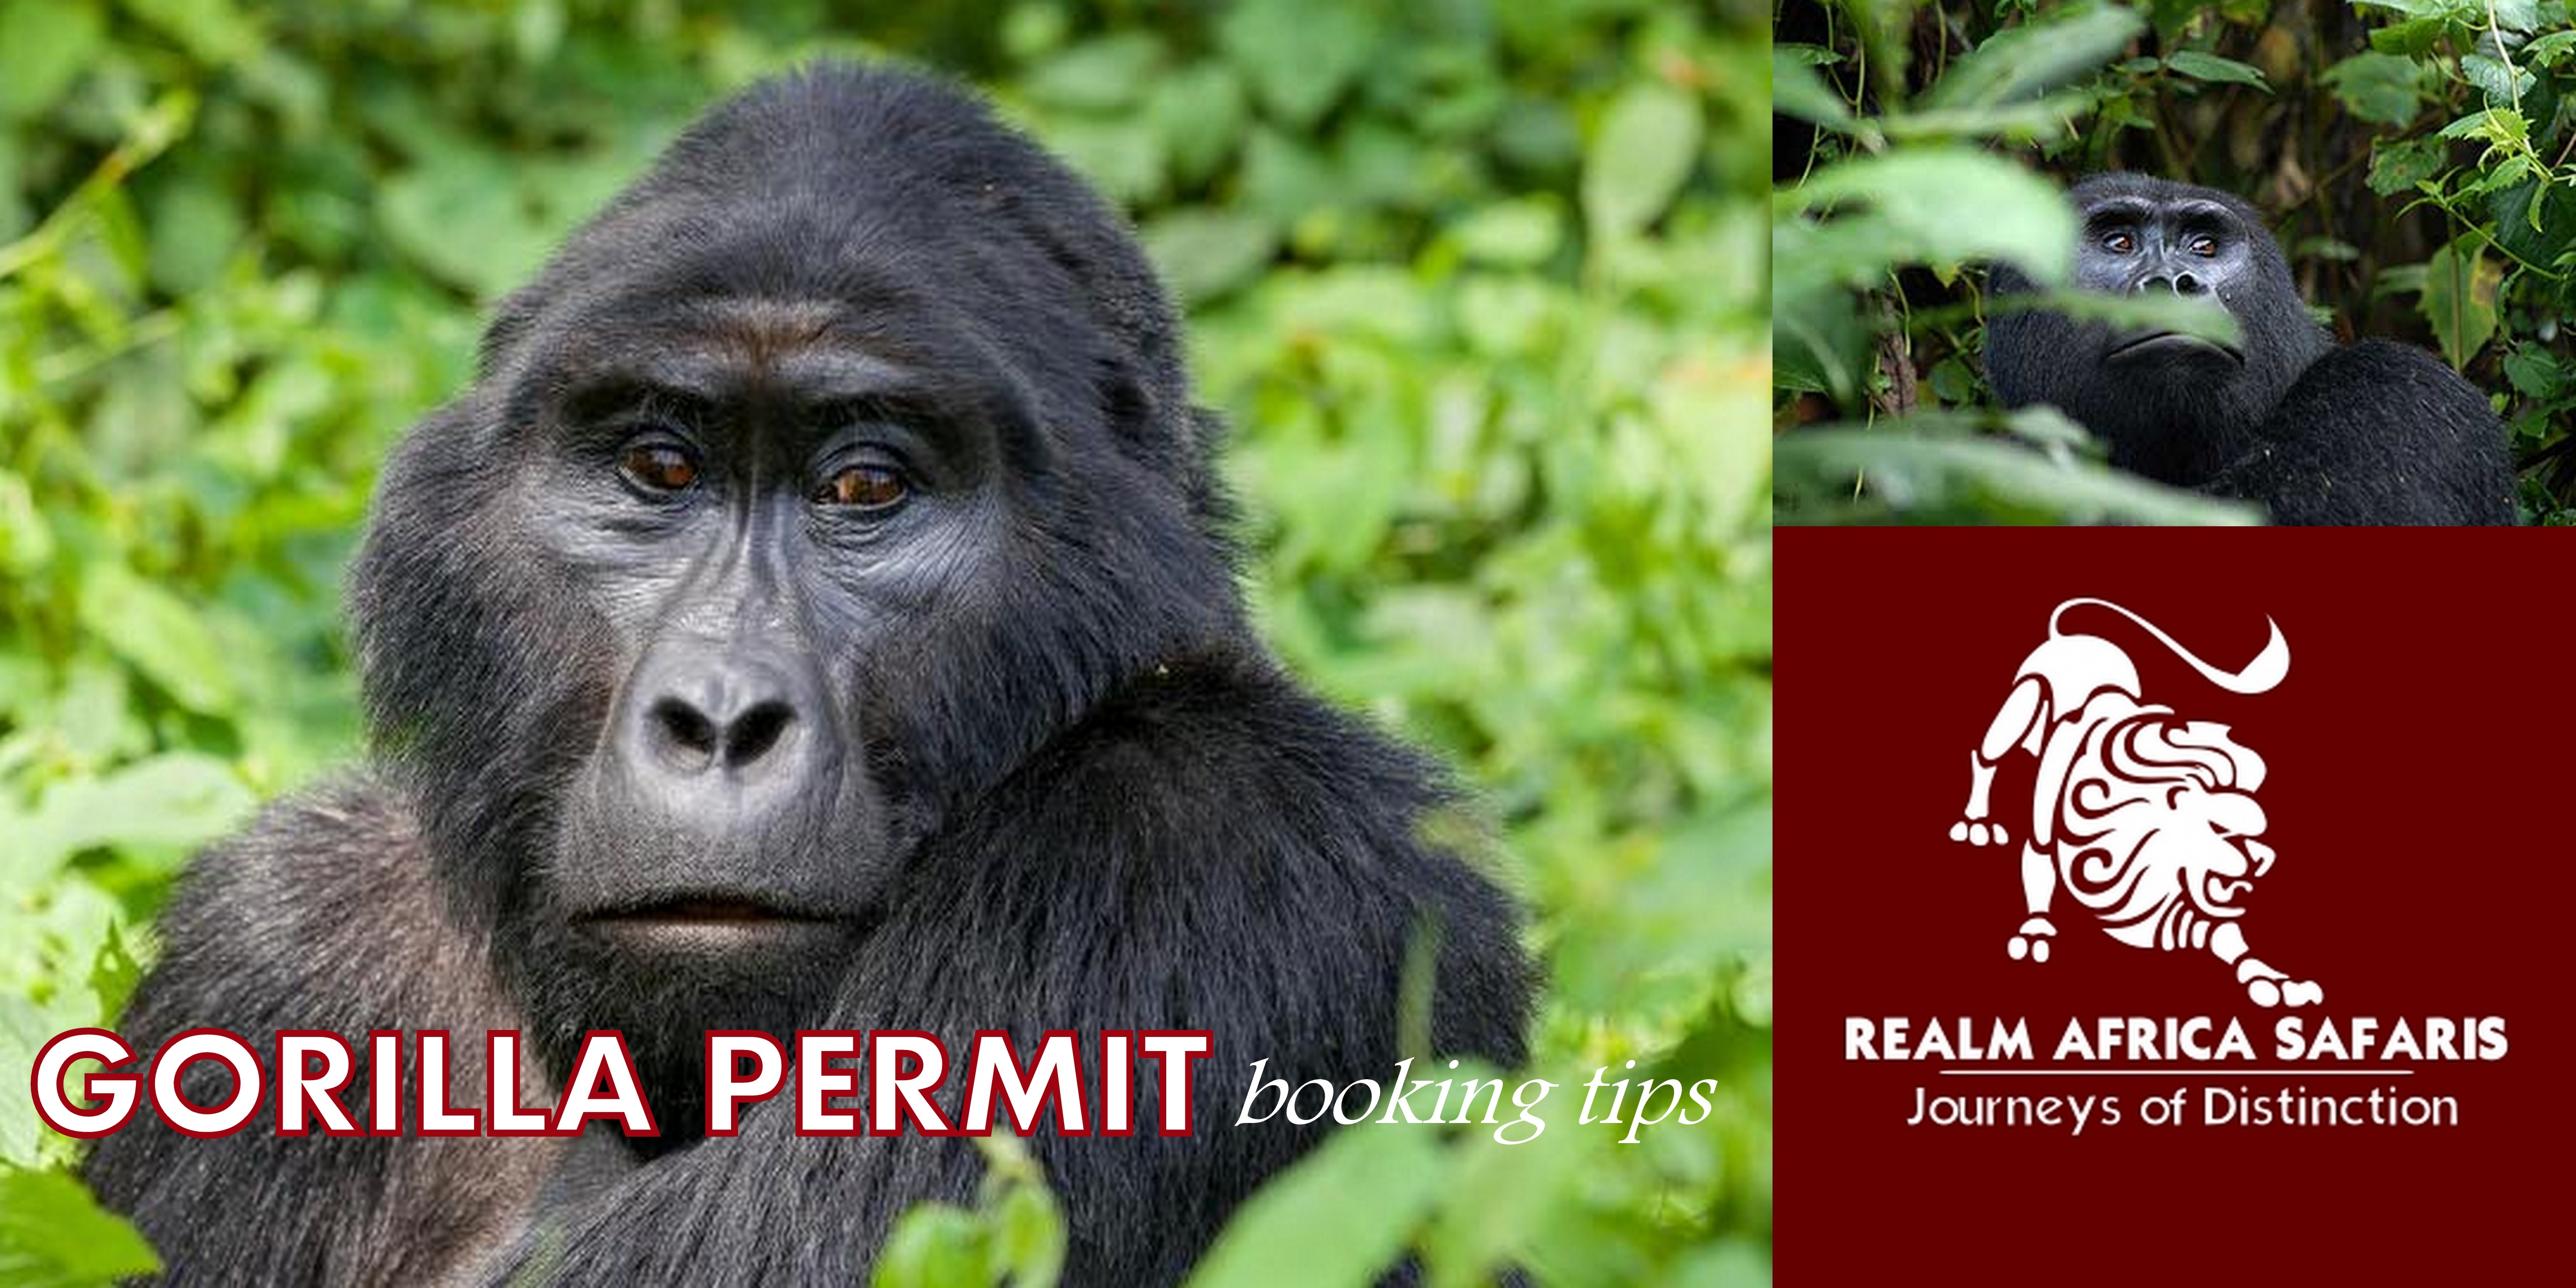 Gorilla Permit booking tips